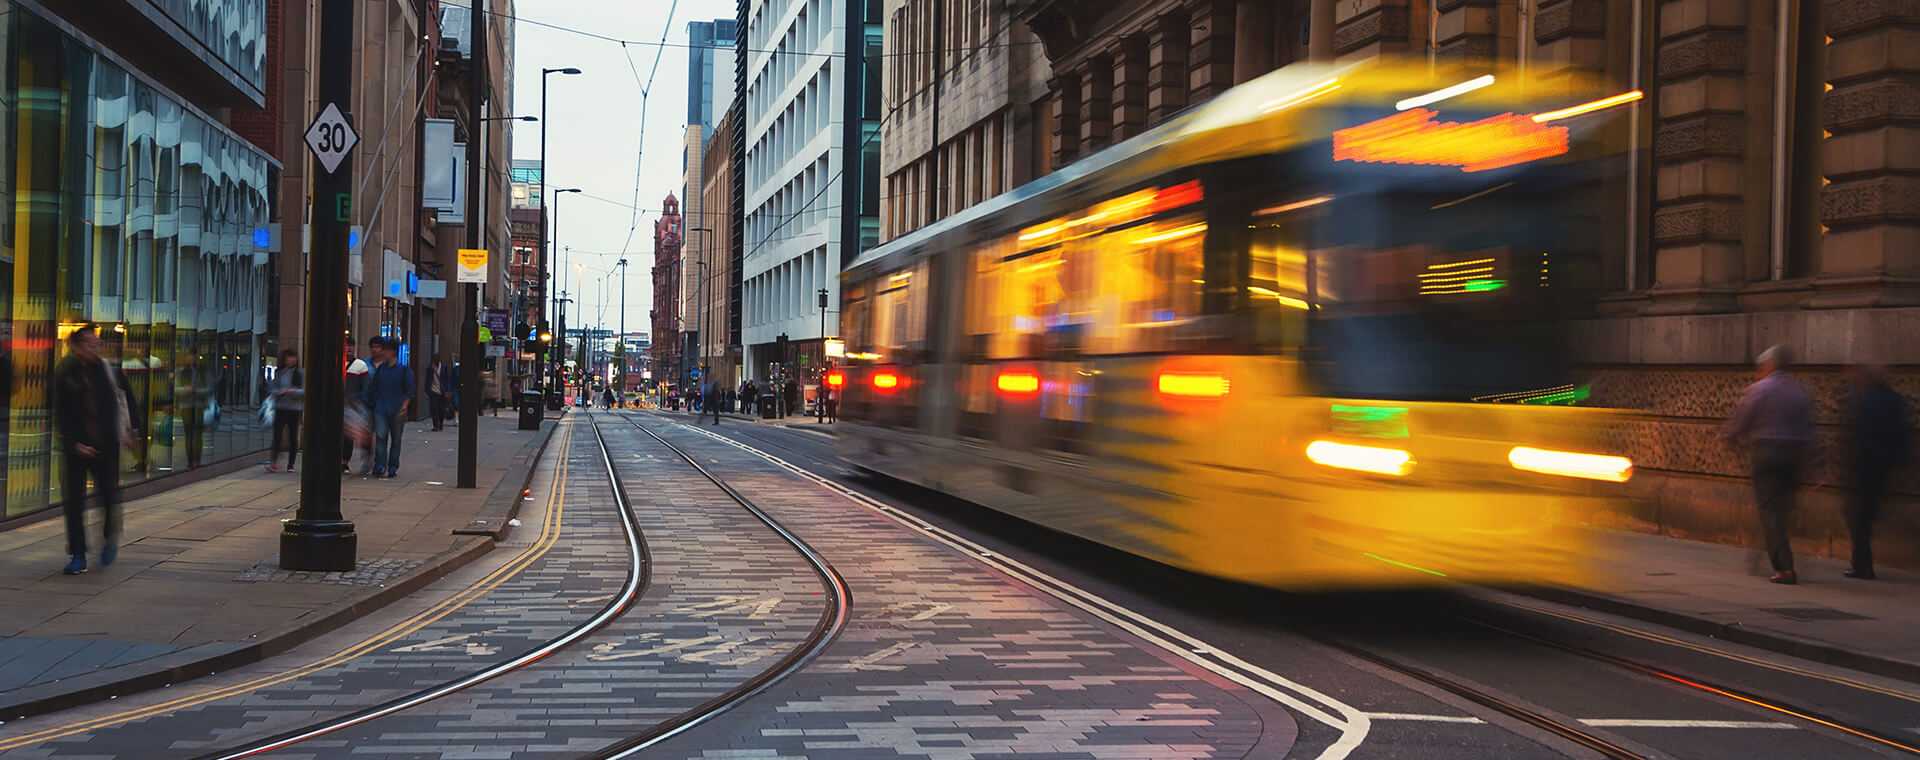 A tram traveling through a busy high street.